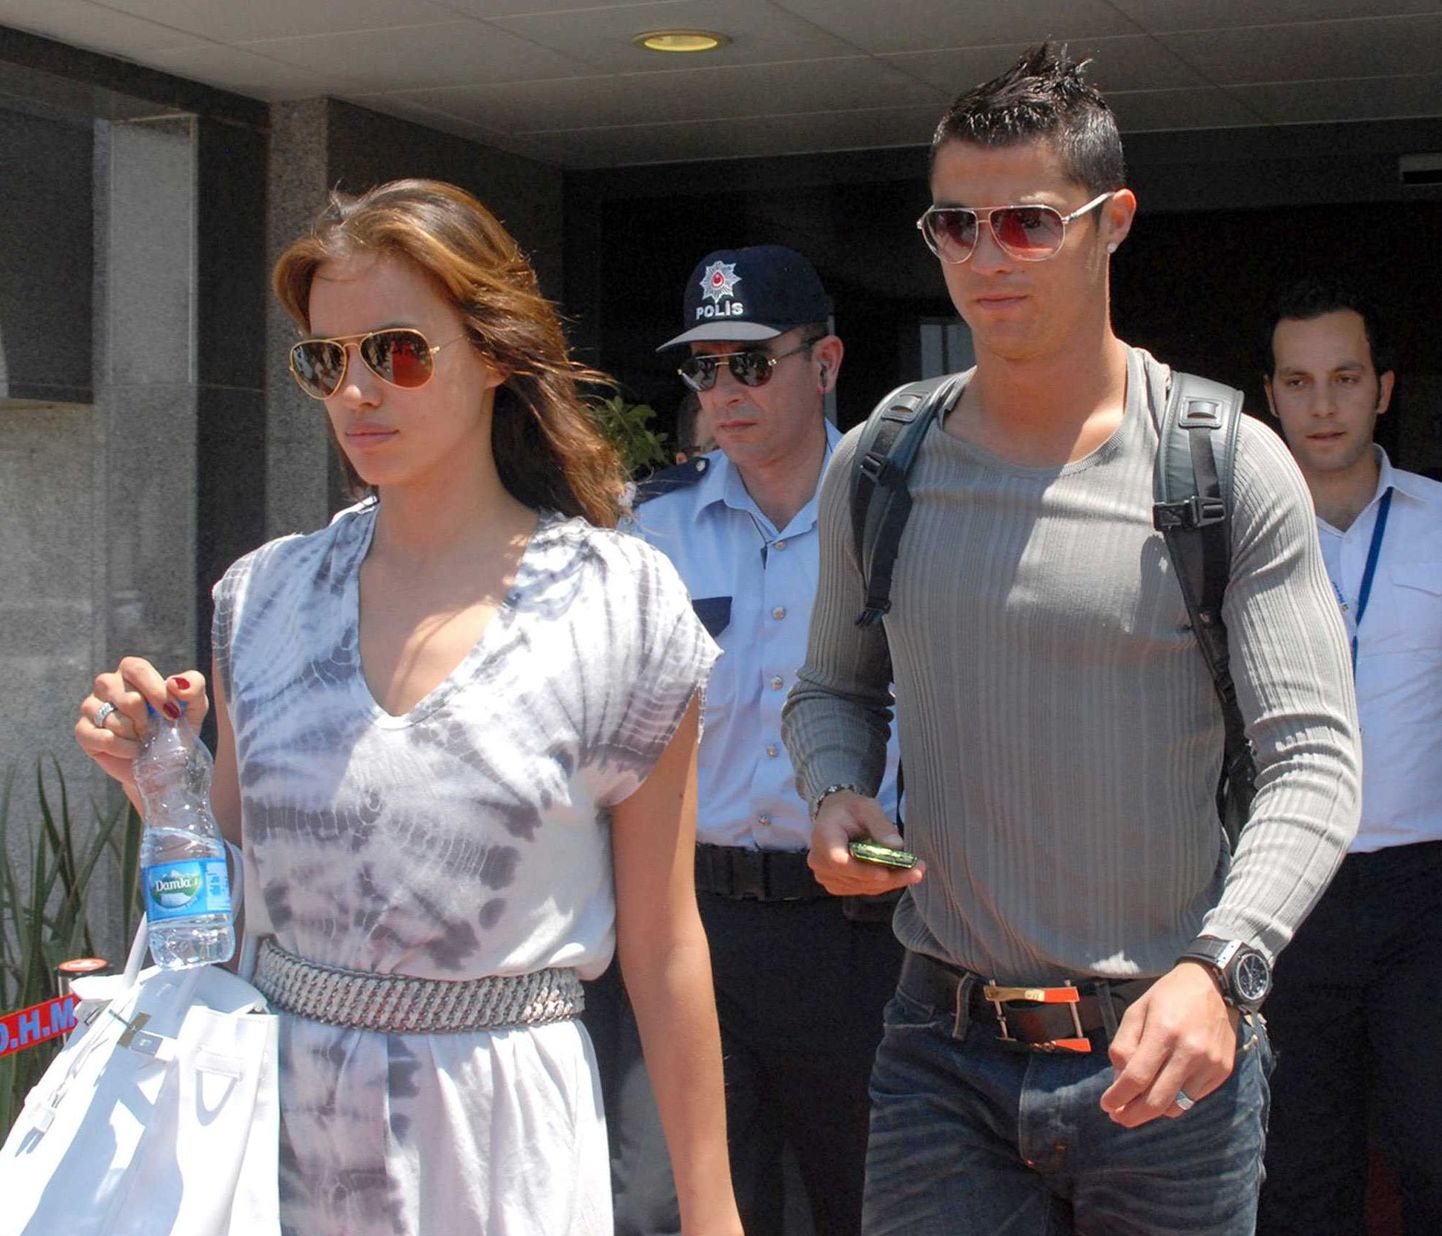 Irina Shayk ja Cristiano Ronaldo.